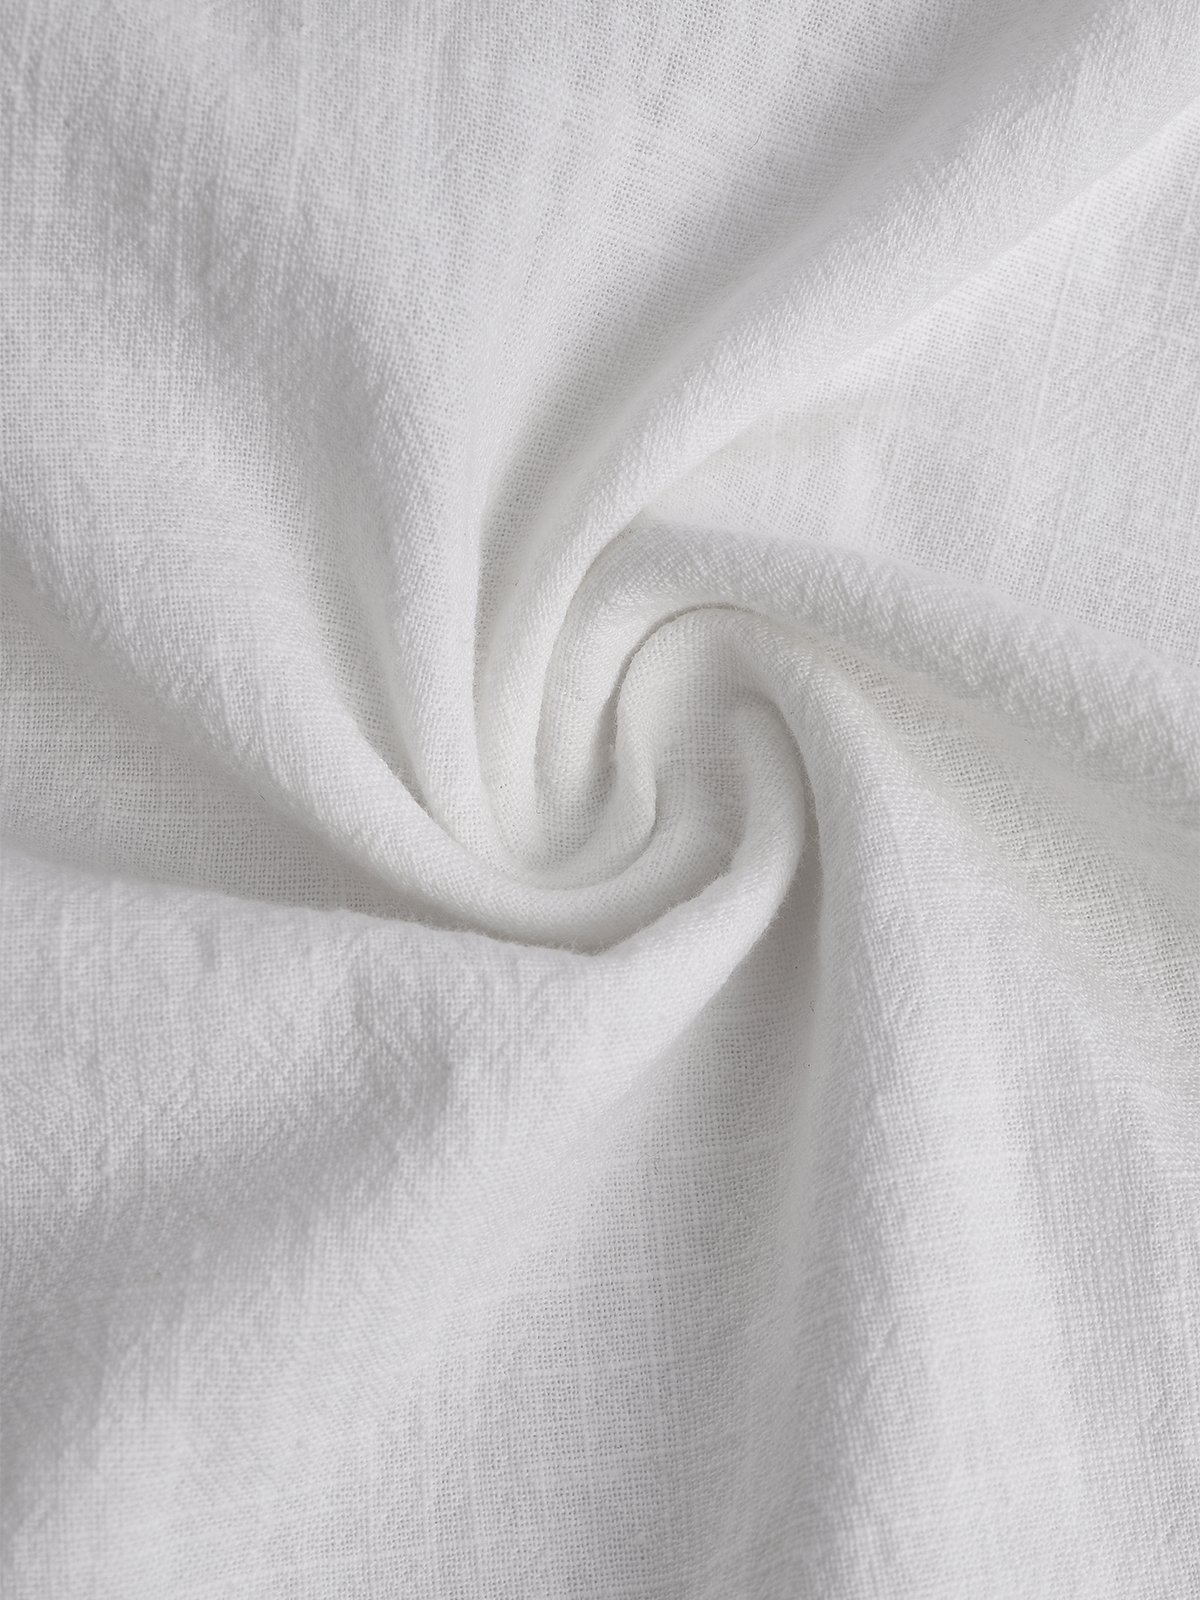 Men's Cotton Linen Style Pocket Long Sleeve Shirt